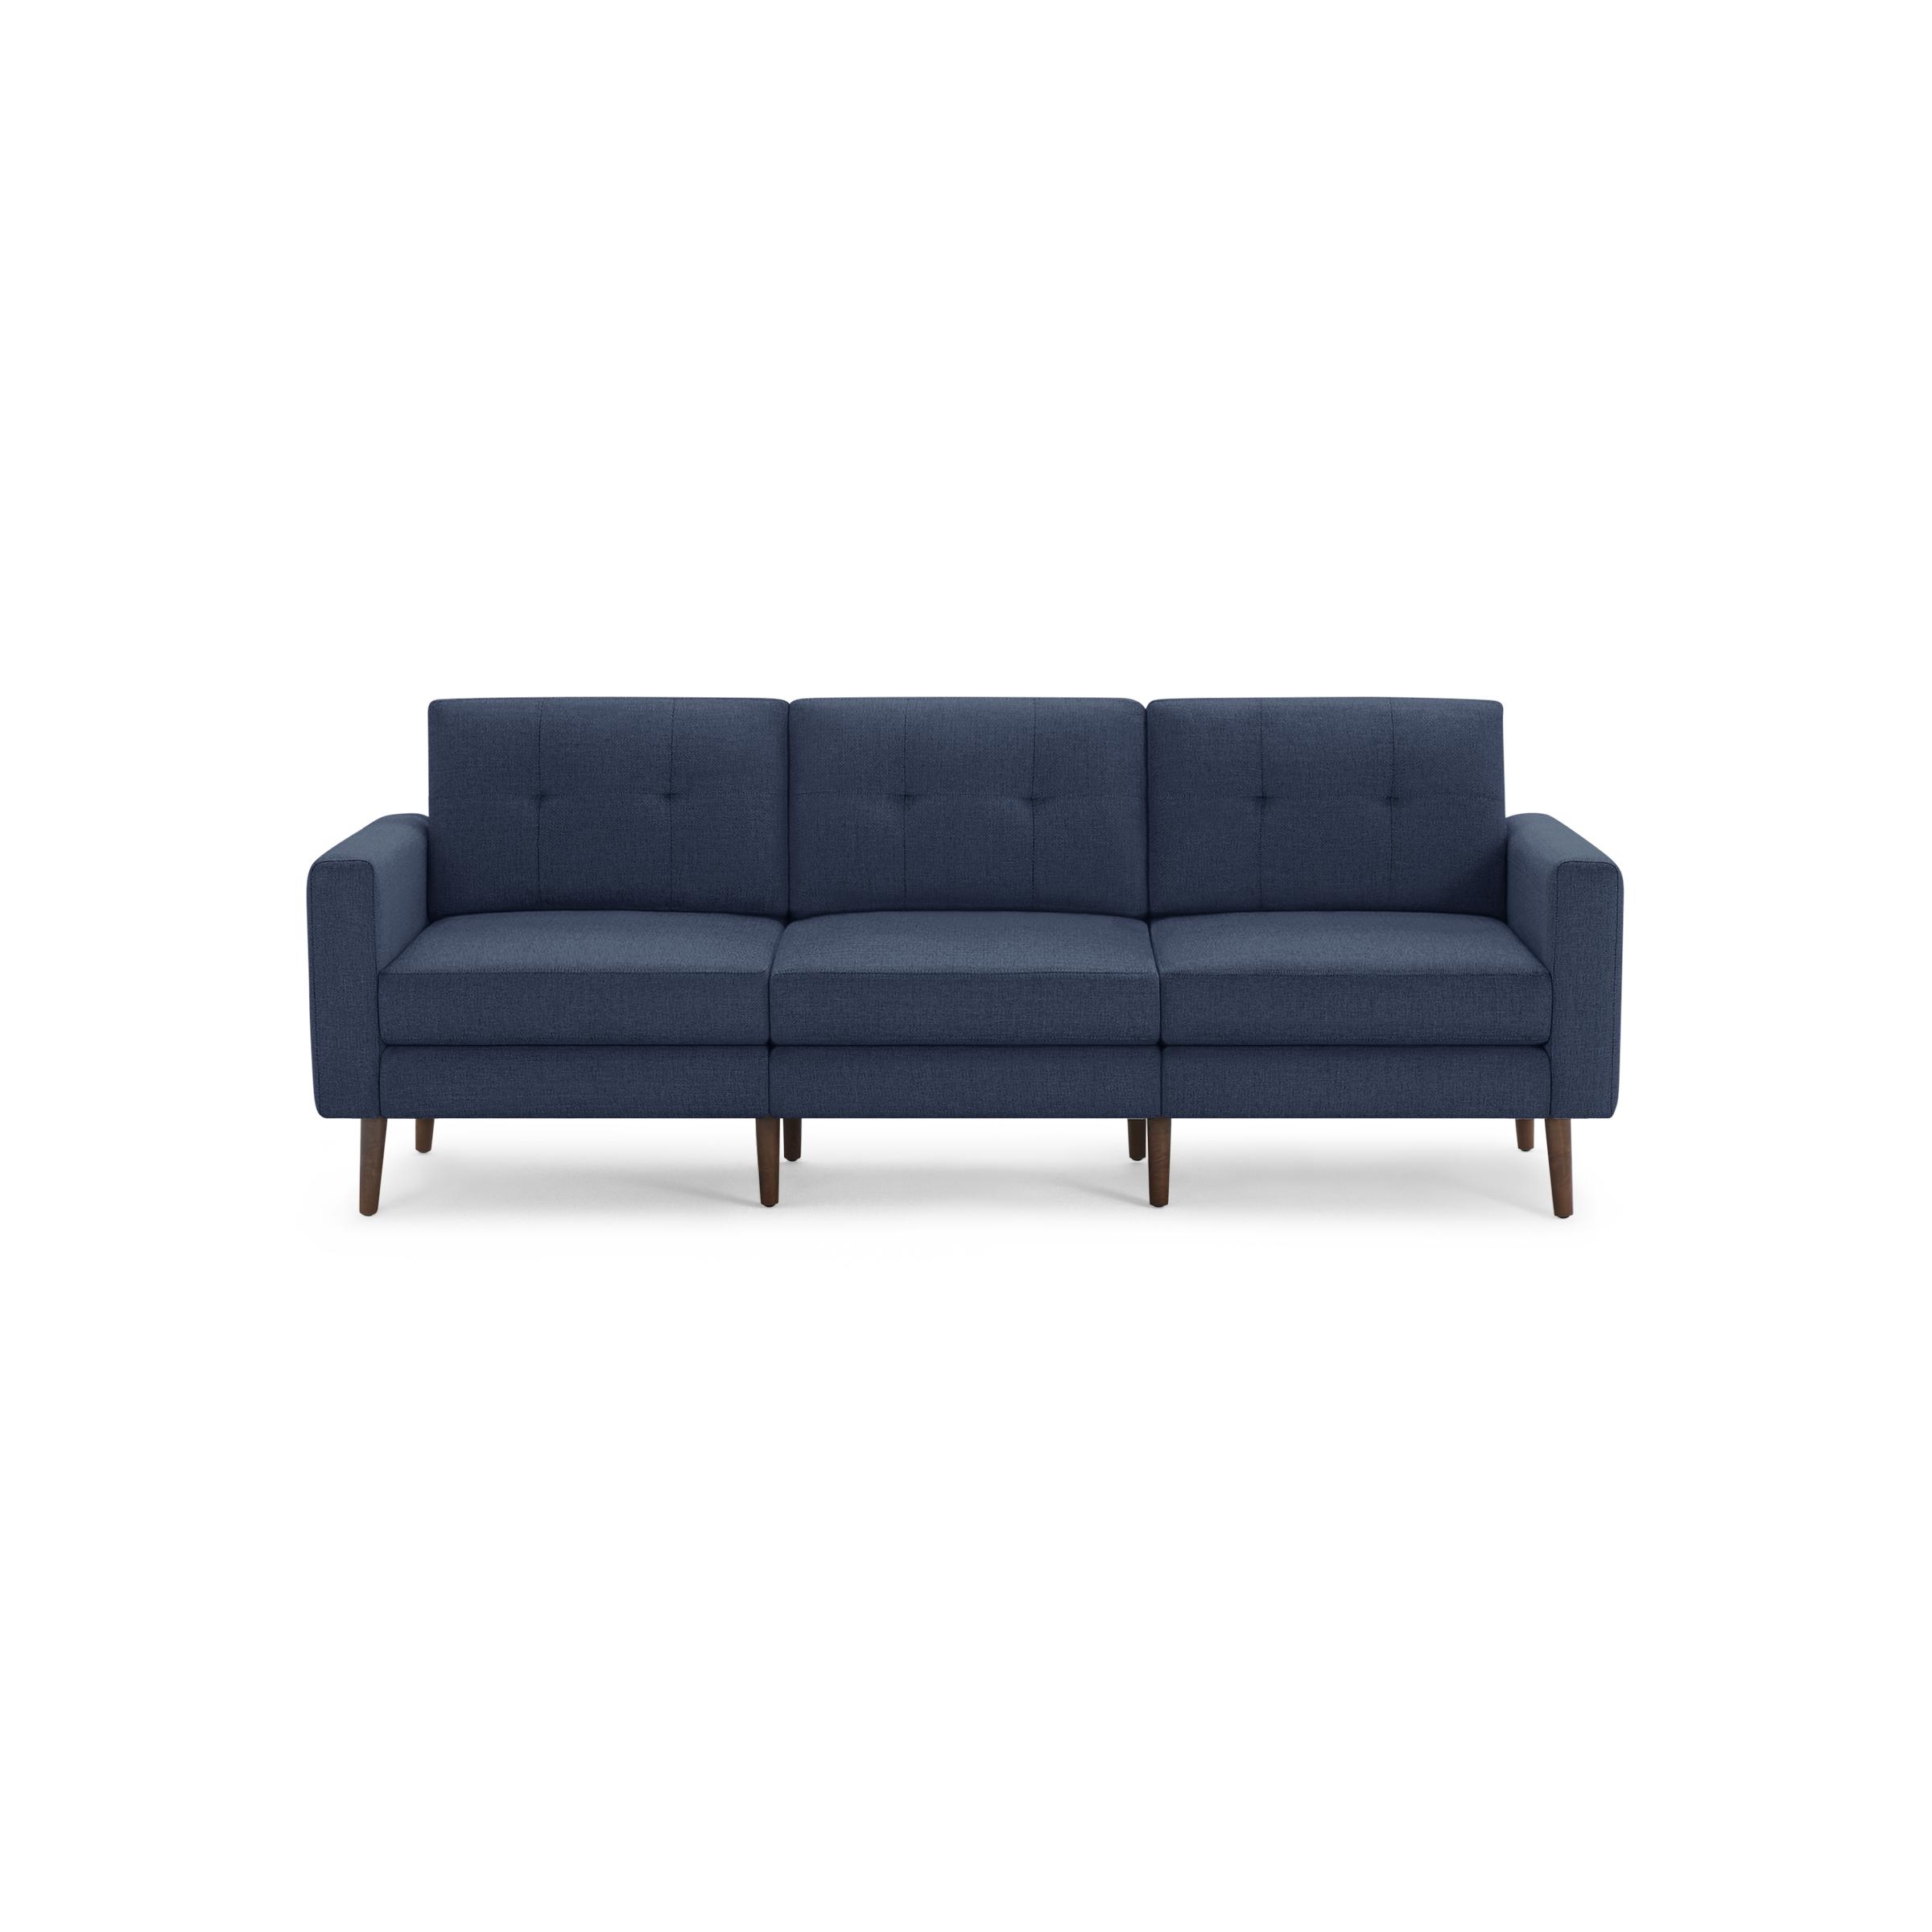 Nomad Sofa in Navy Blue, Walnut Legs, Leg Finish: WalnutLegs - Image 0